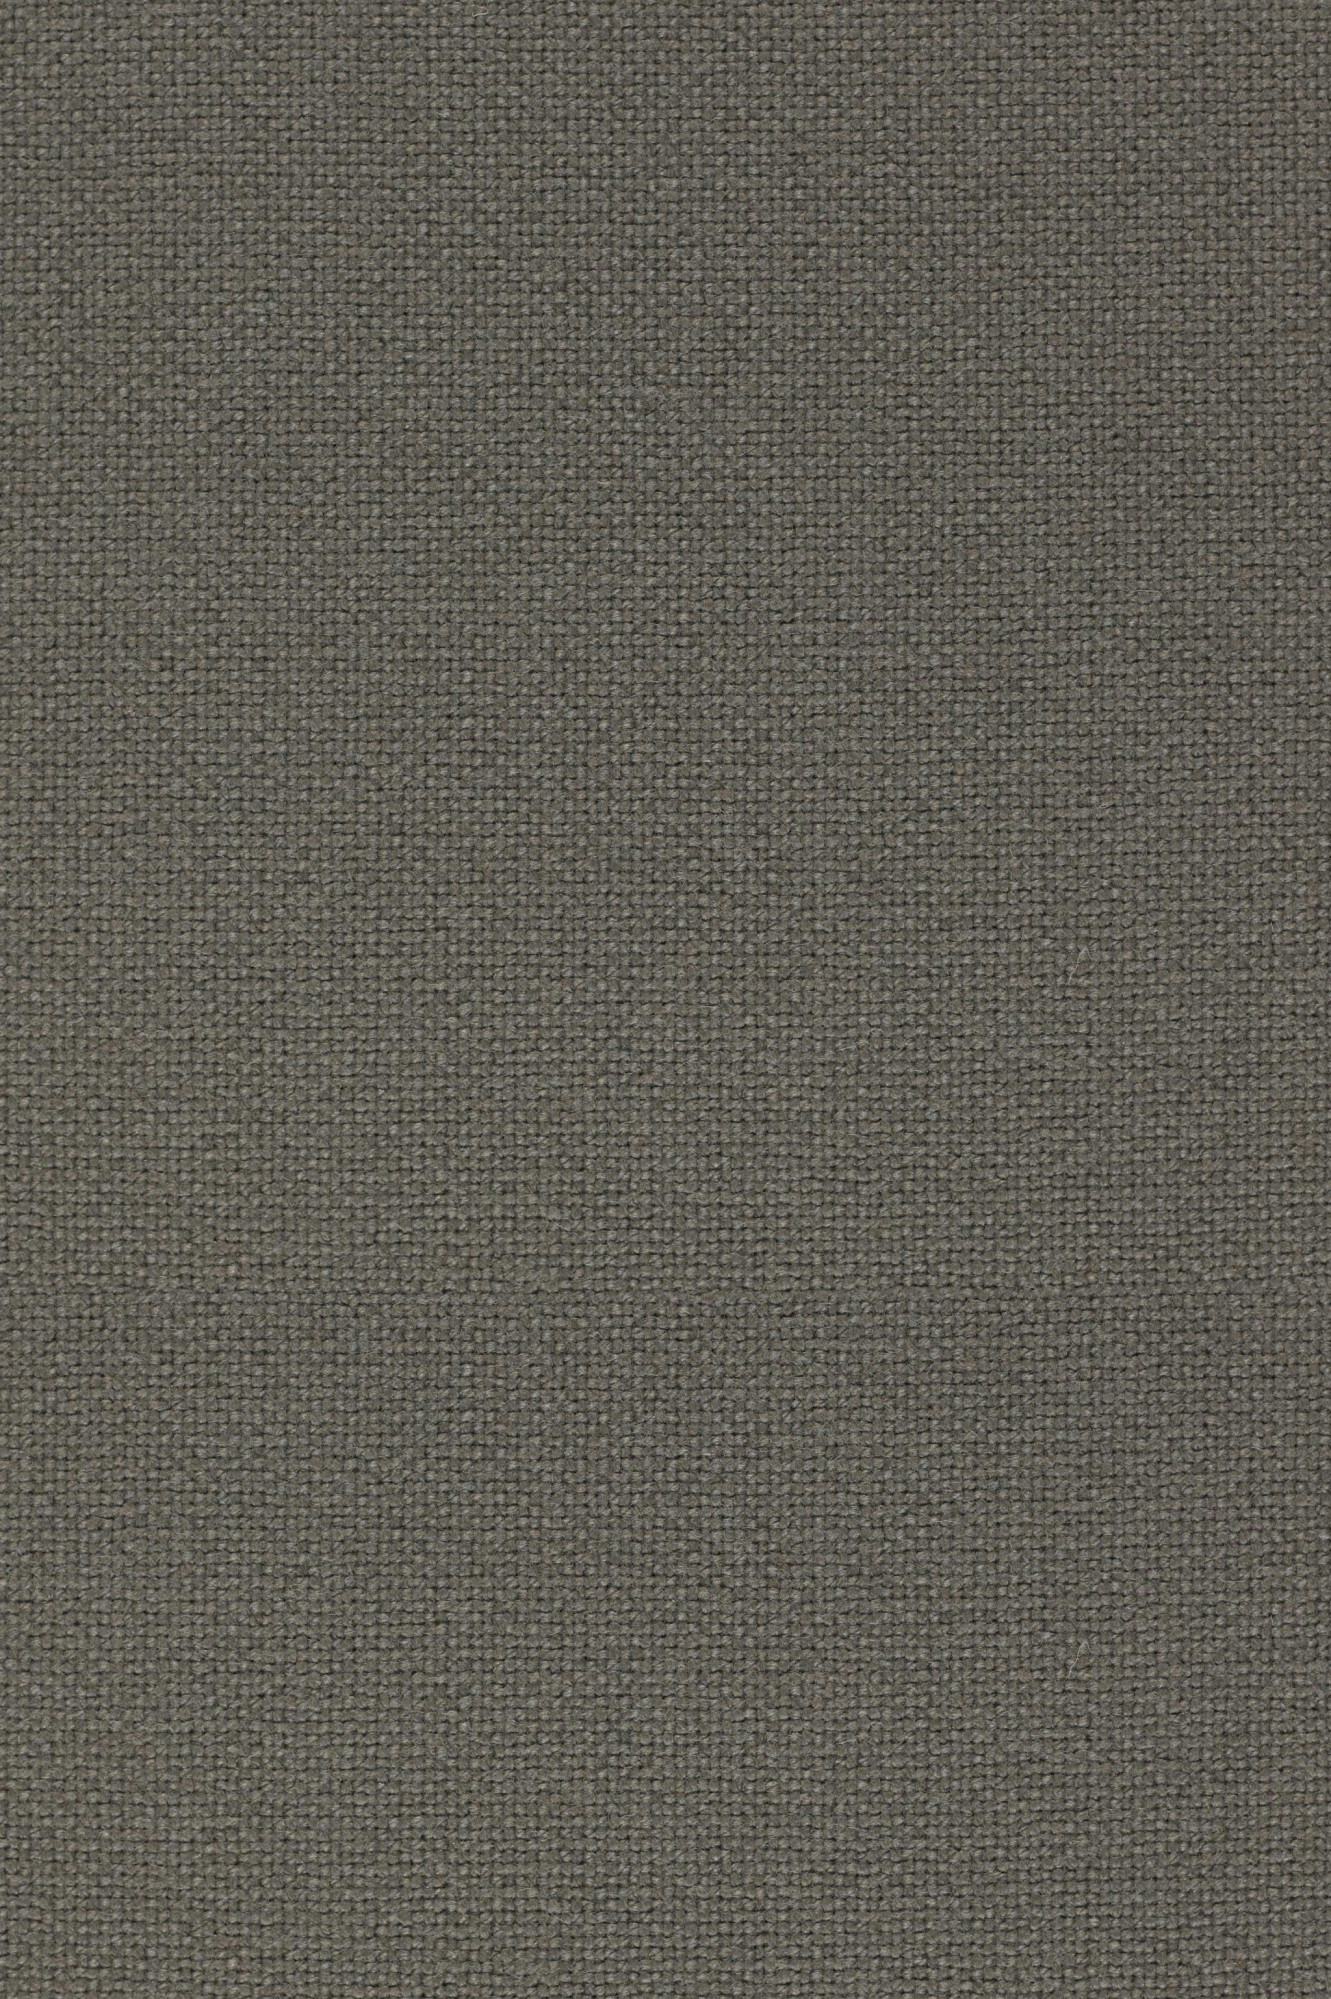 Fabric sample Hallingdal 65 143 grey